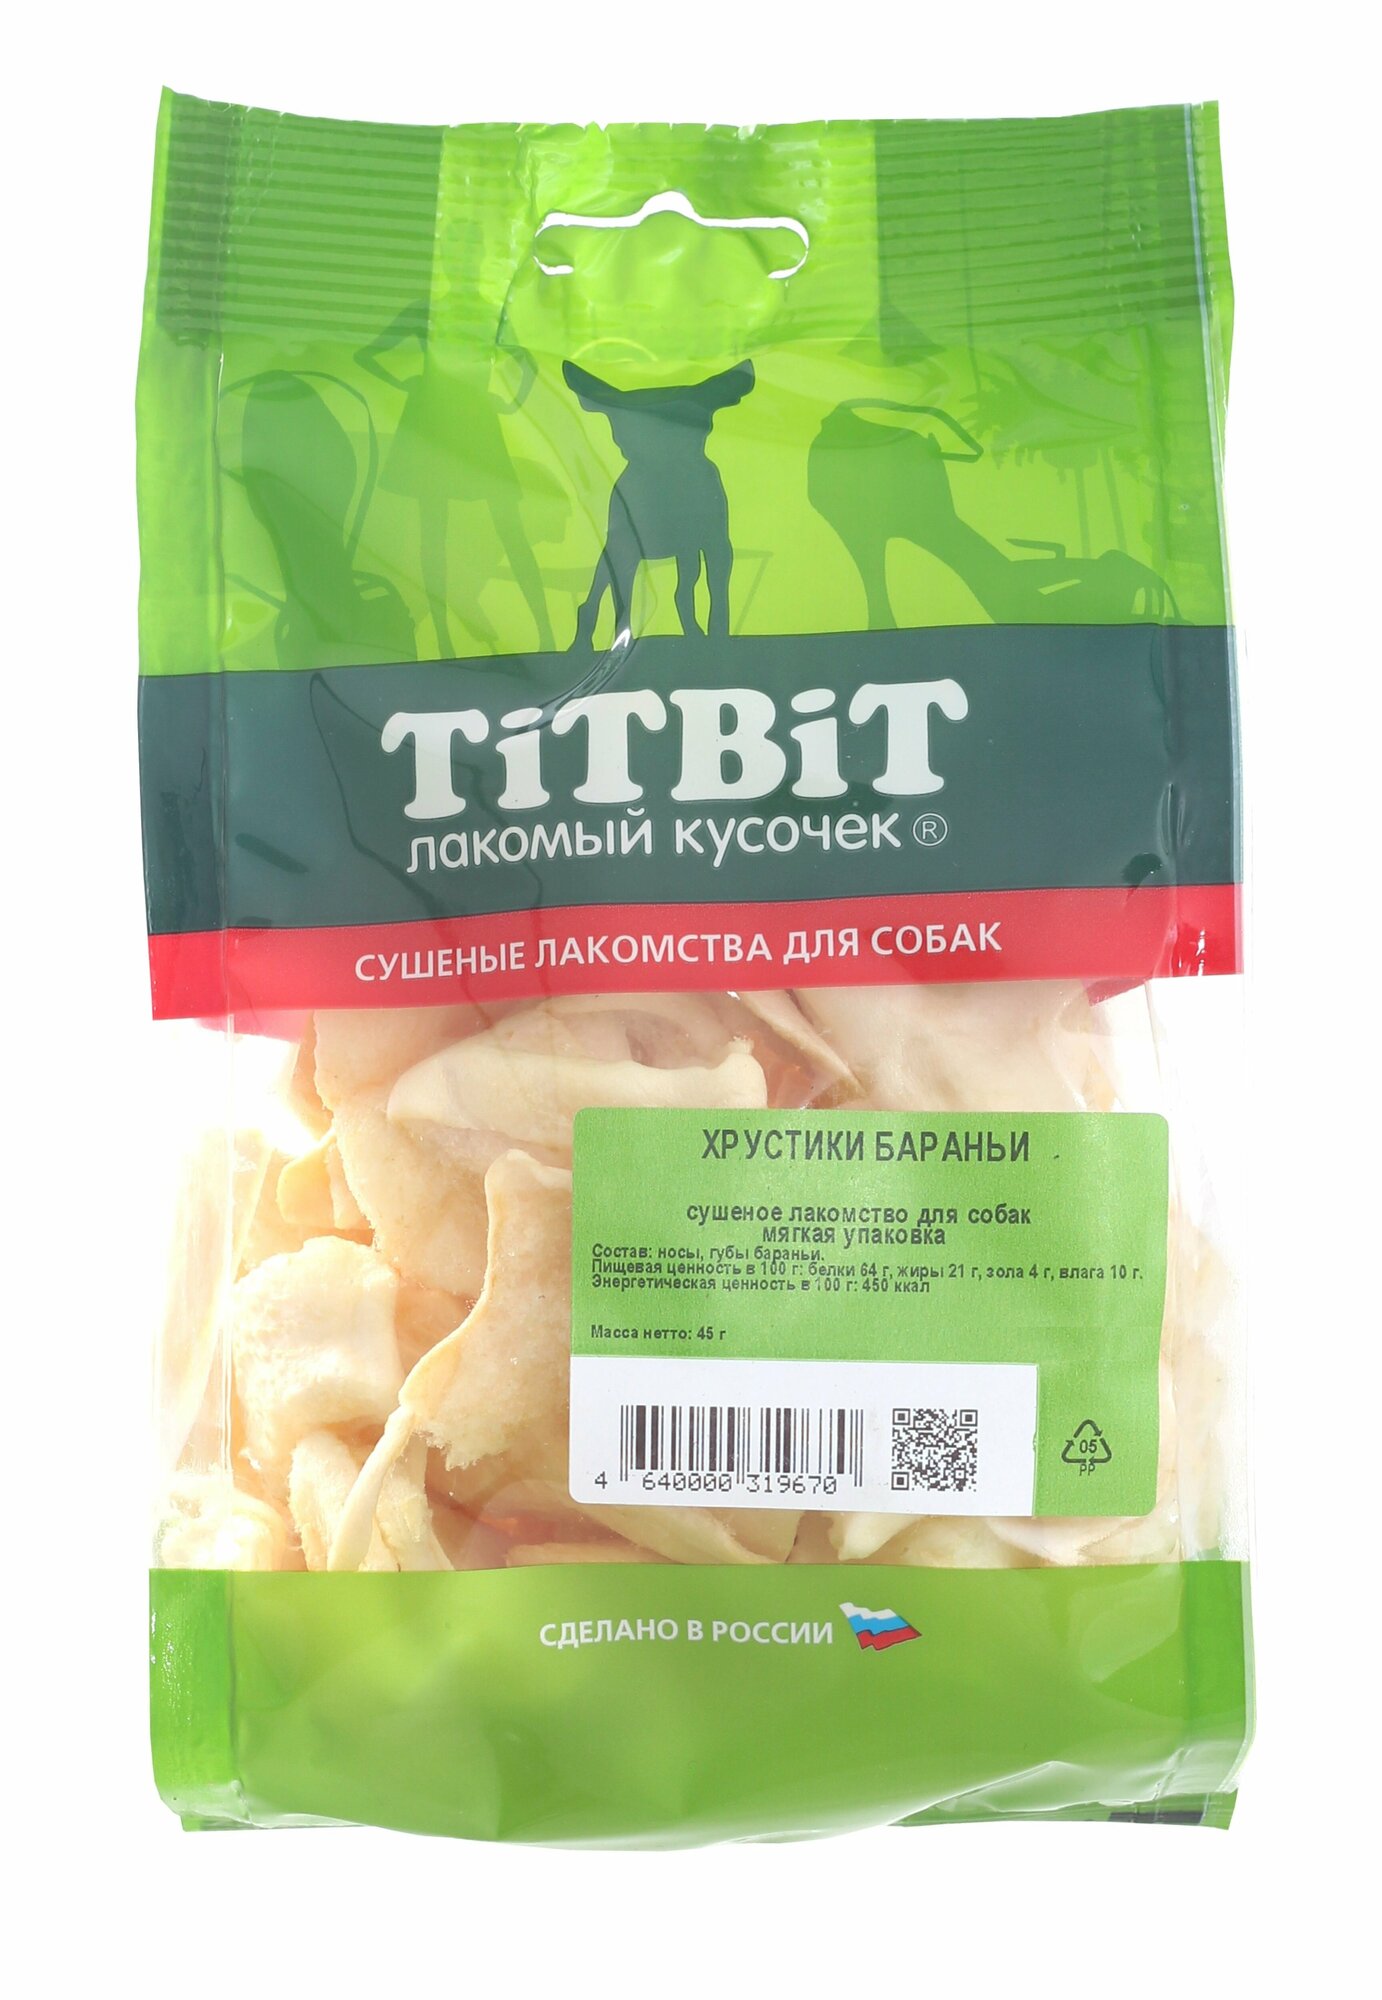 TitBit Хрустики бараньи (мягкая упаковка) 45г